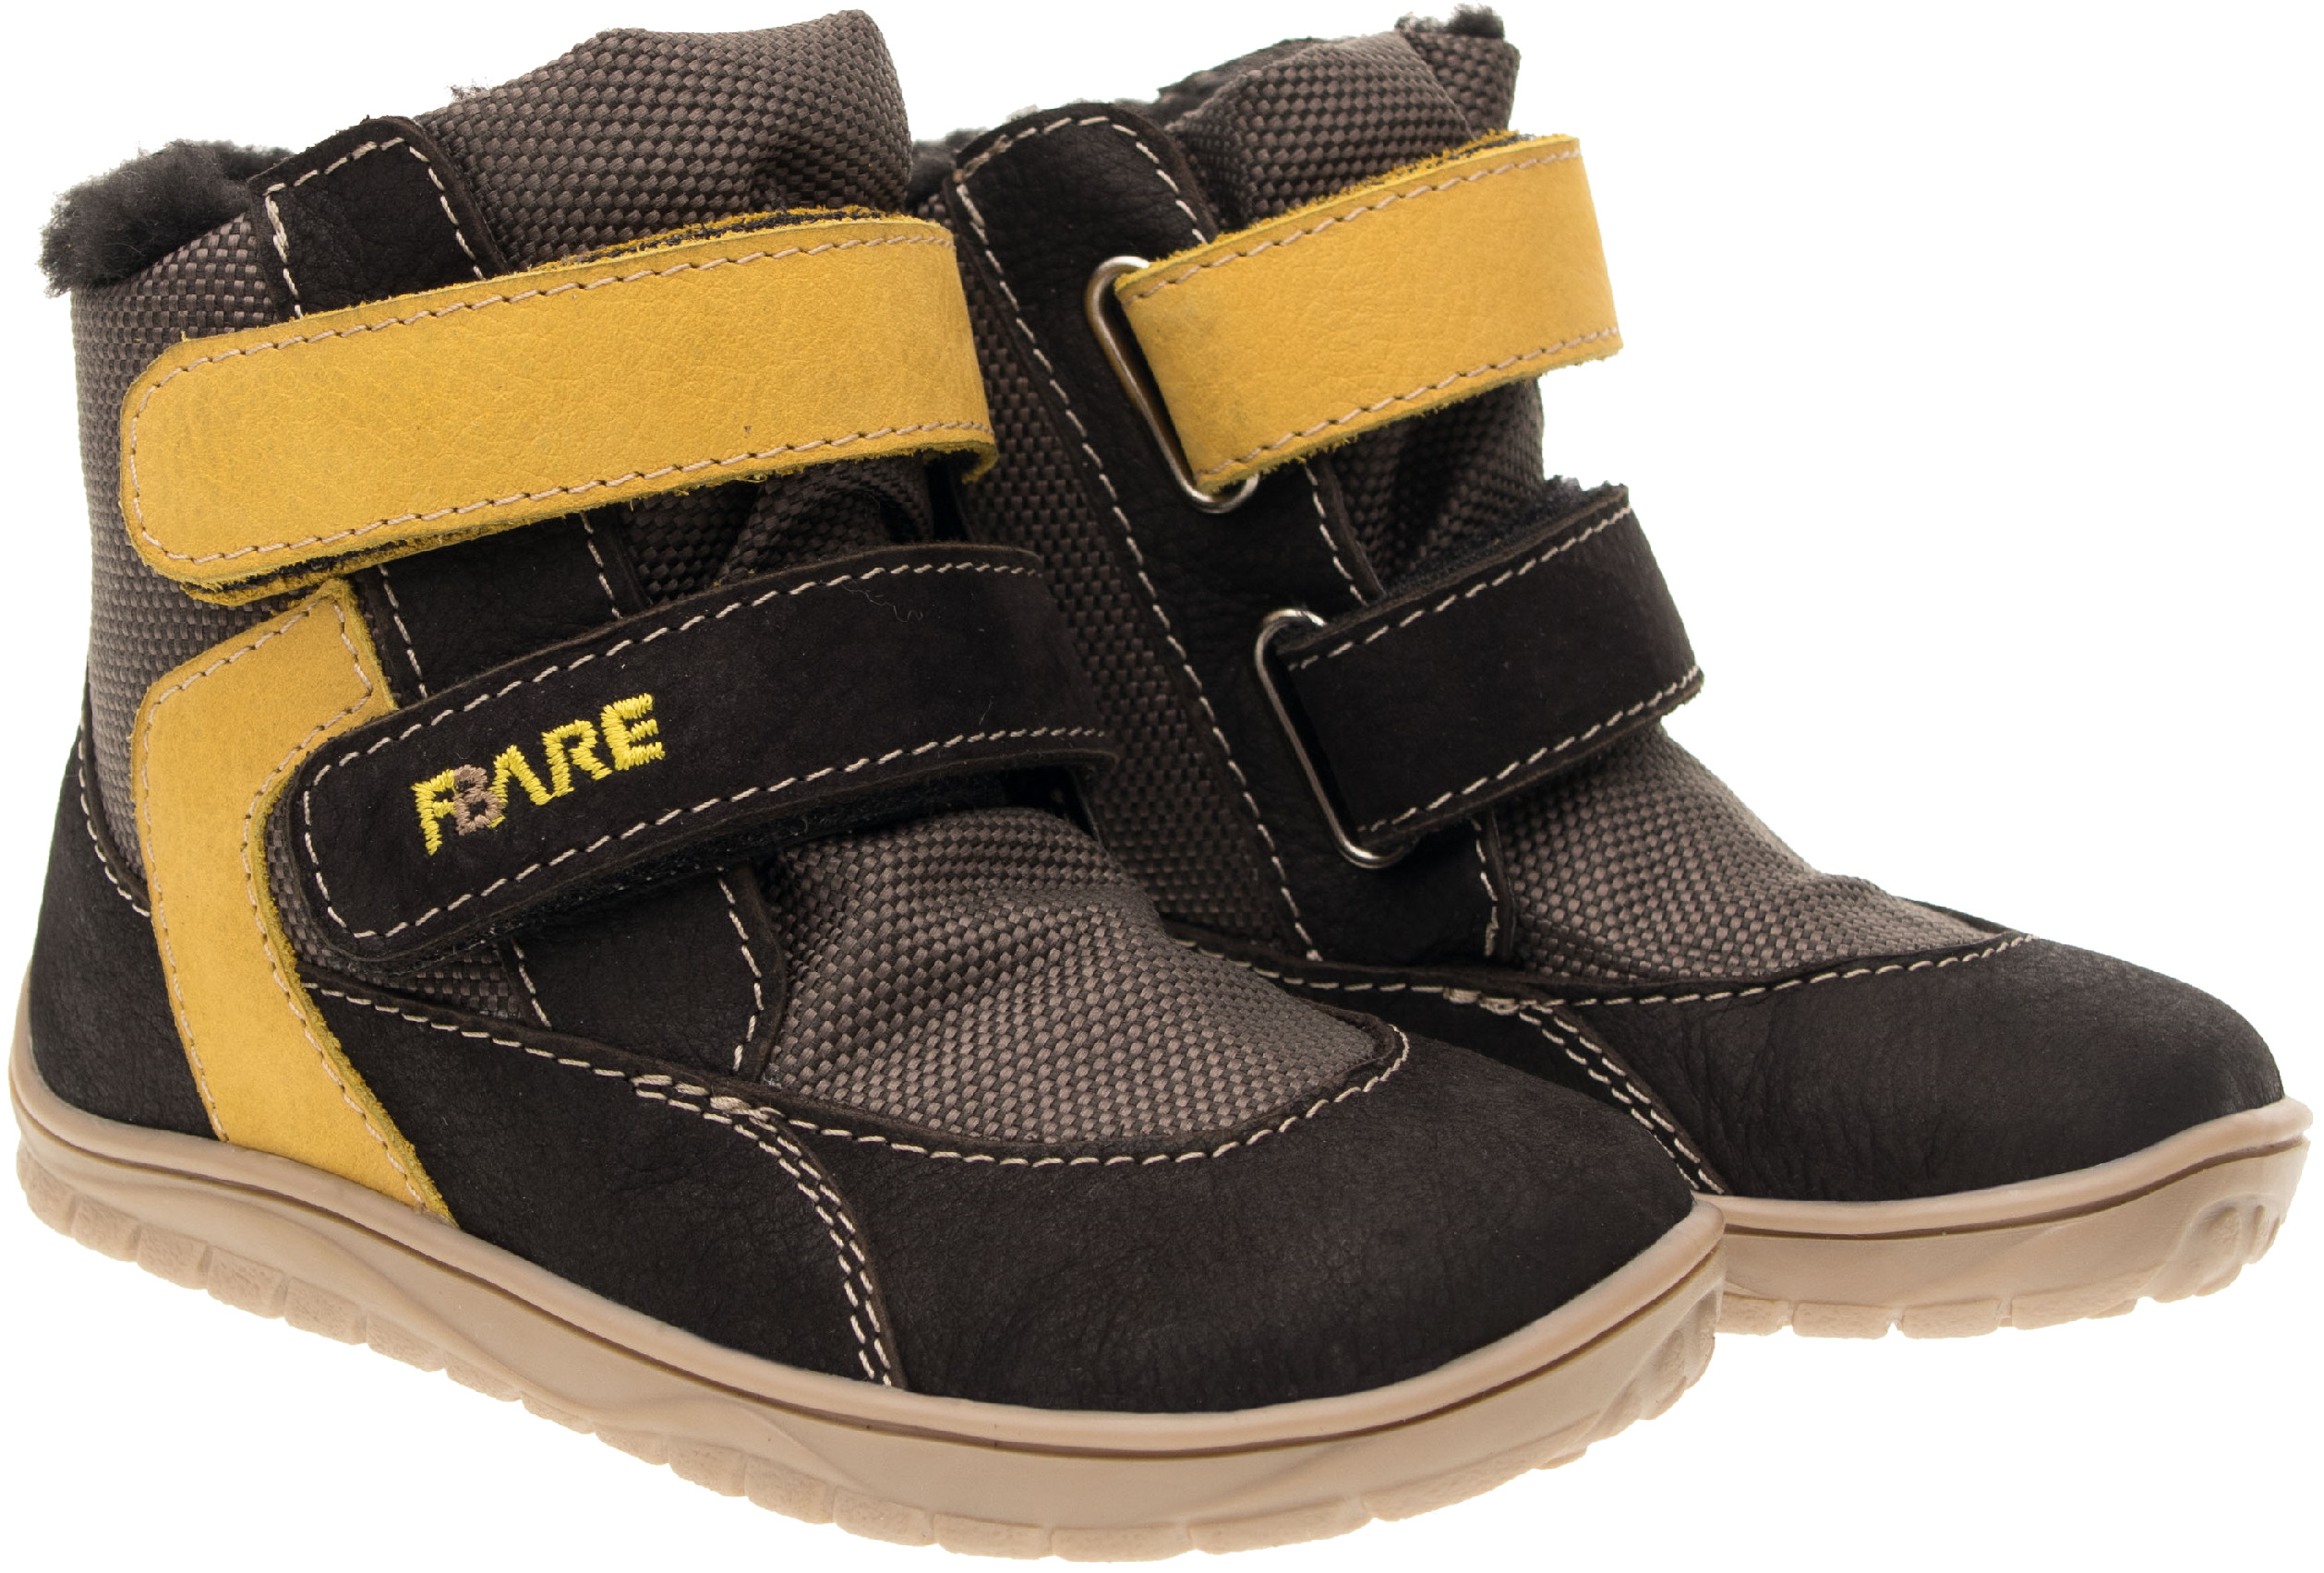 FARE BARE zimní obuv B5544211 Velikost: 26